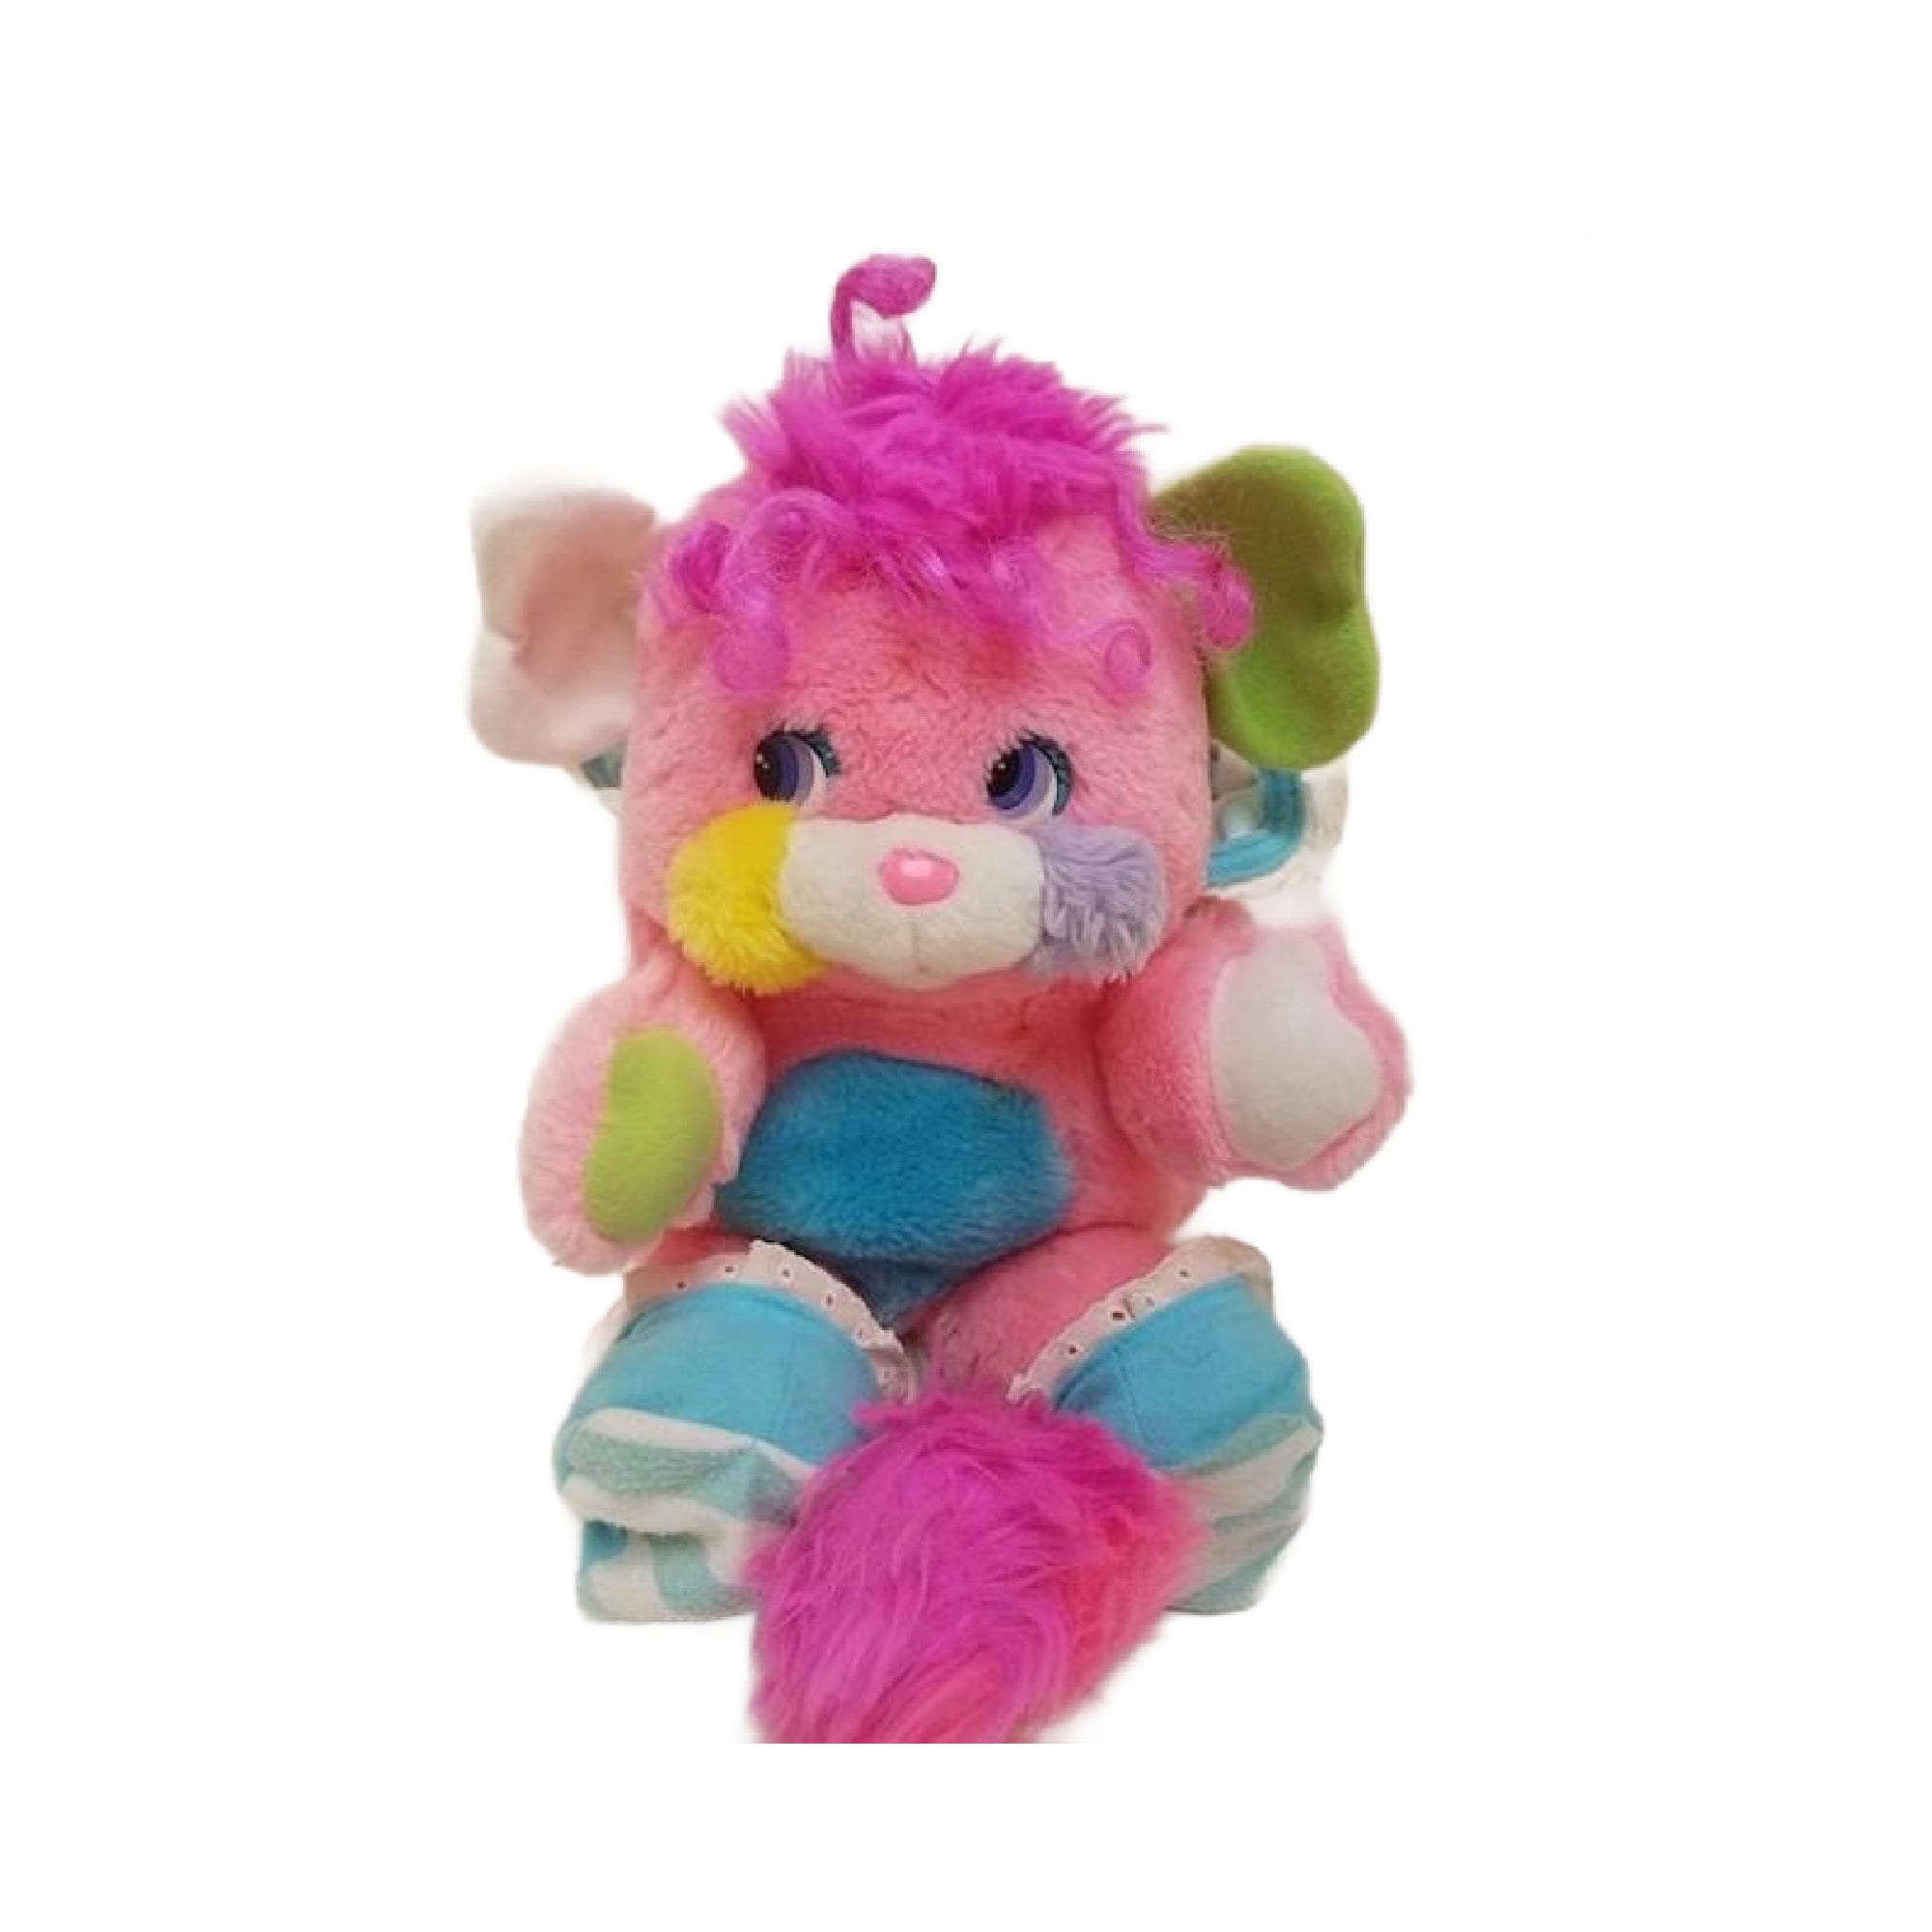 Vintage Popples baby Cribsy Pink Plush Stuffed Animal 11 Mattel